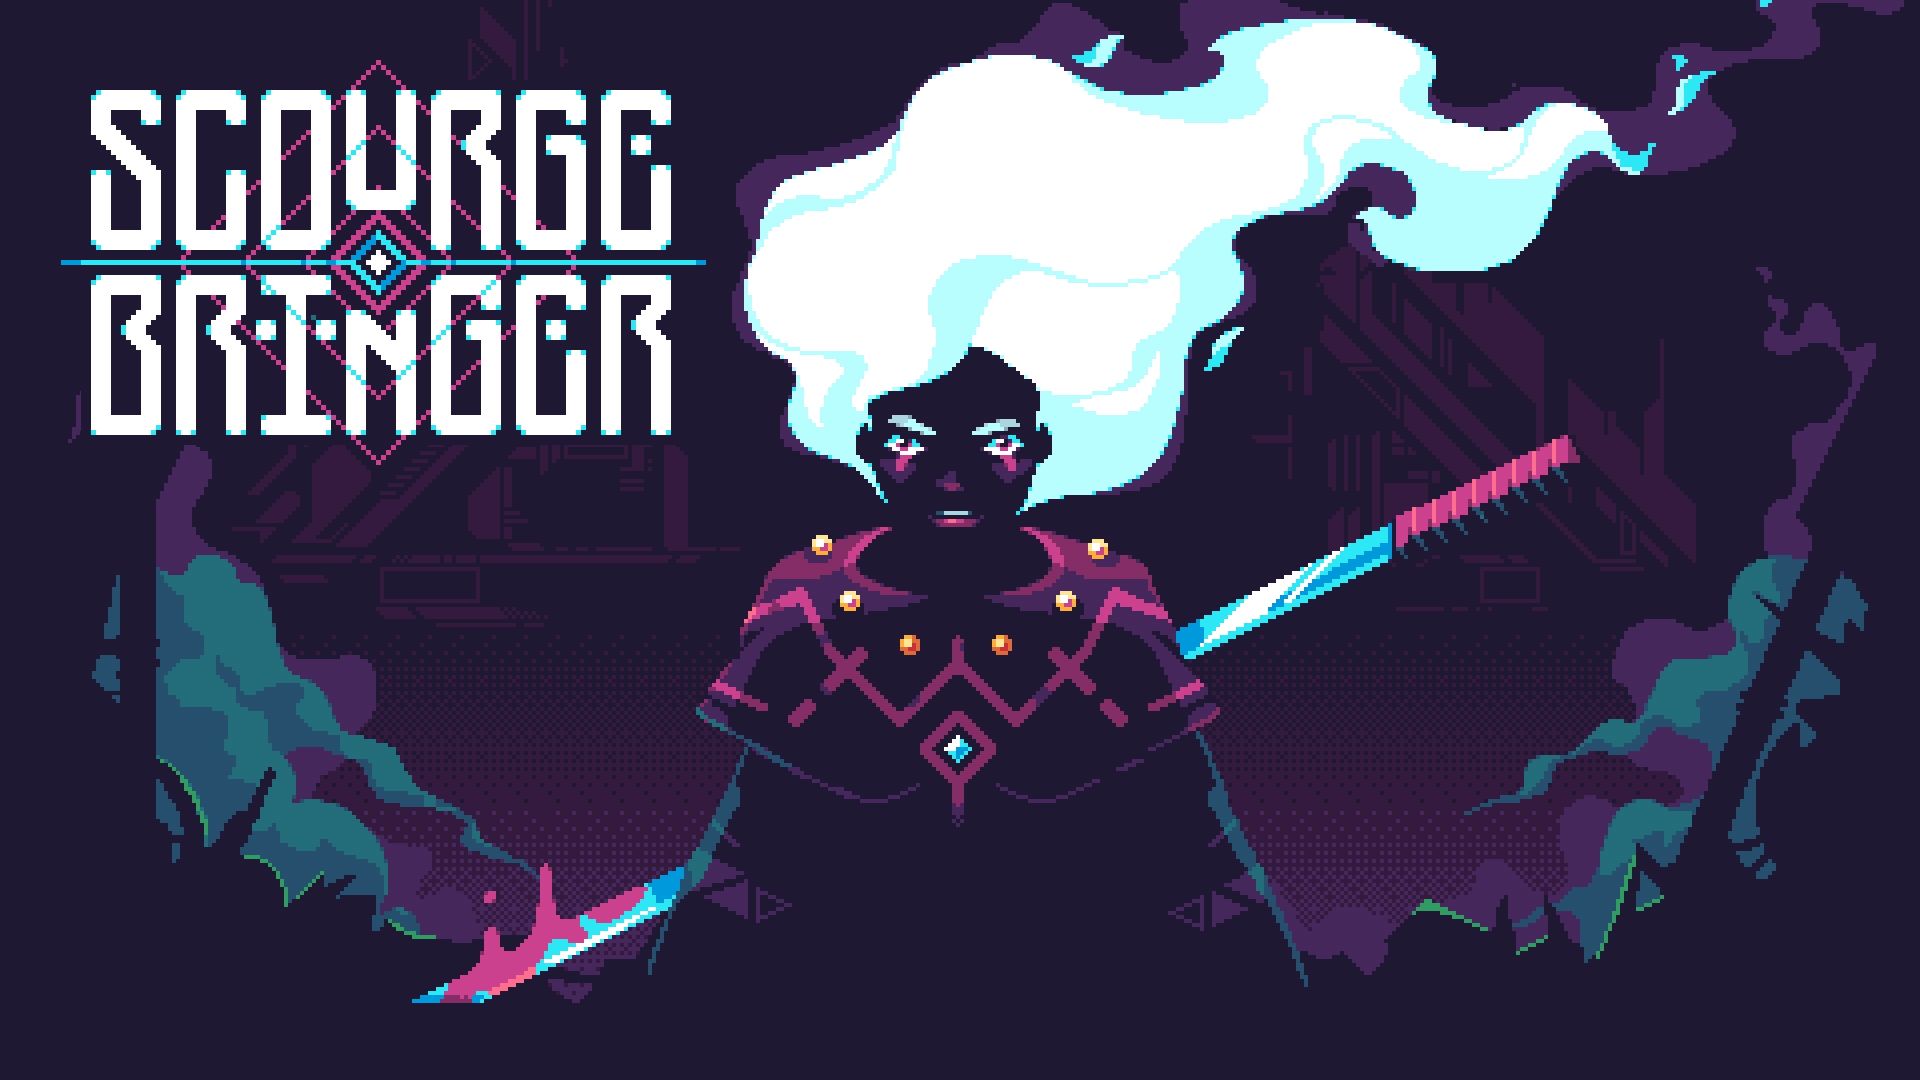 ScourgeBringer Review: Shmup Like Rogue Lite